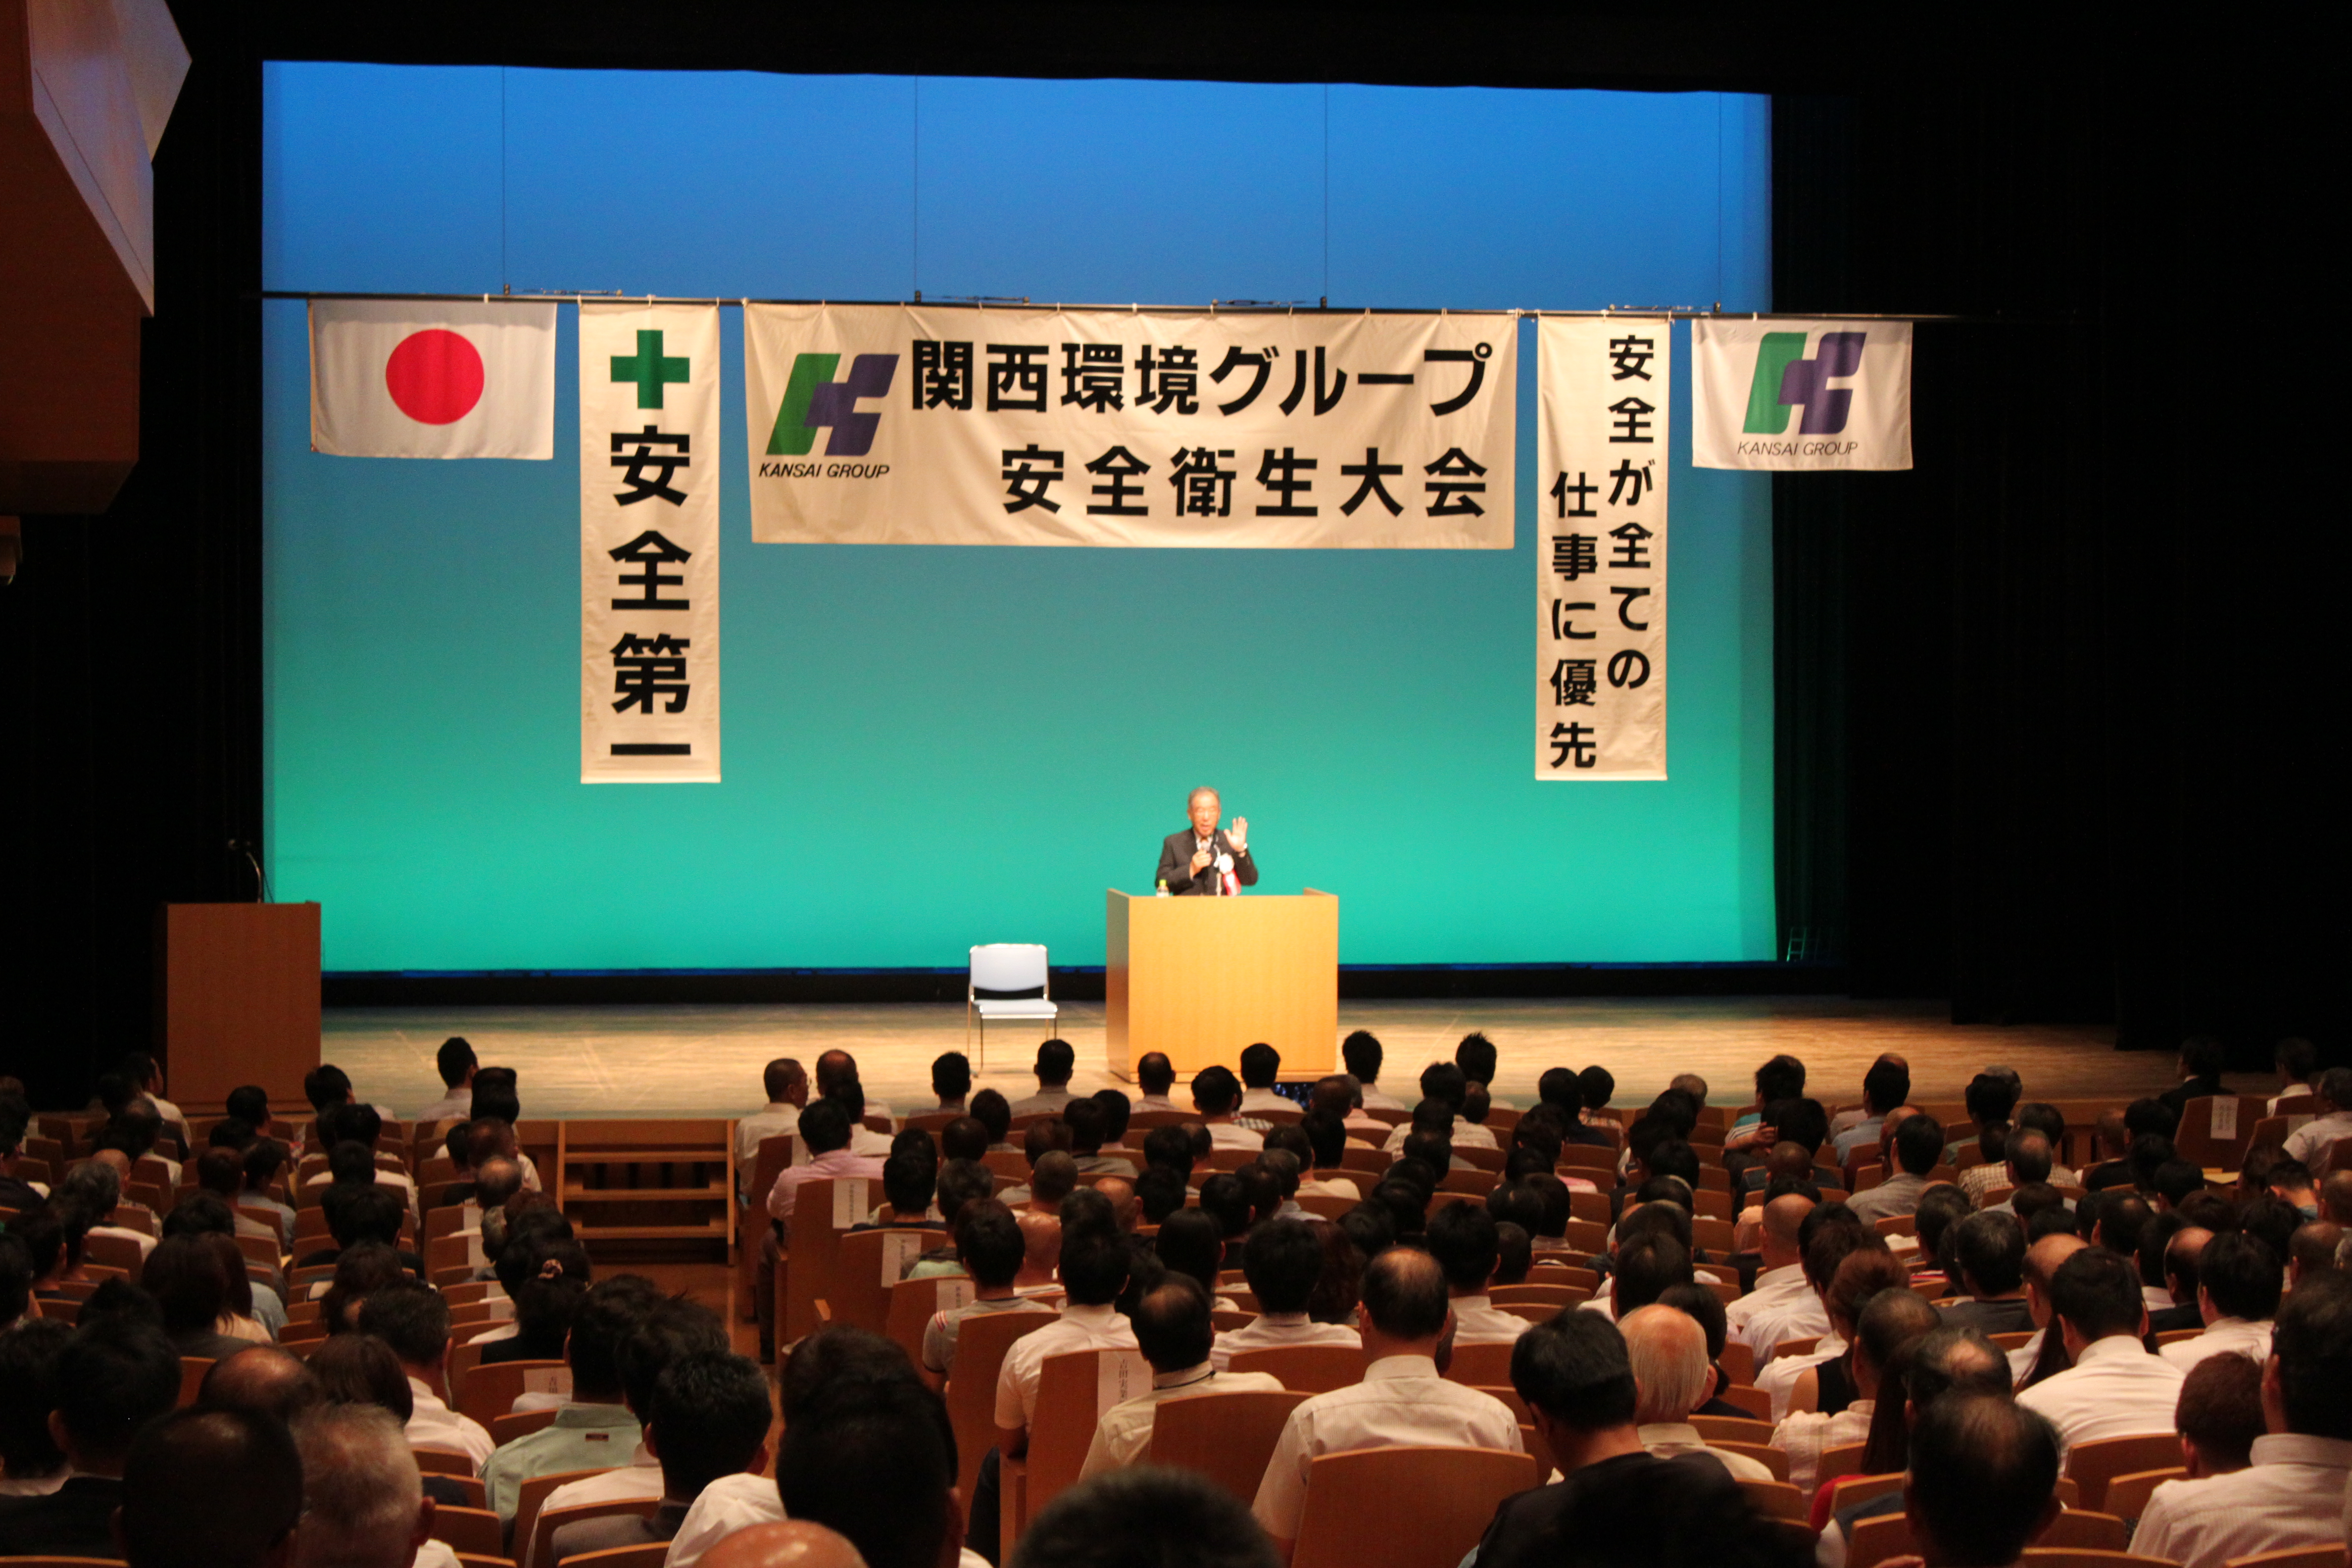 http://kansaikankyo-group.co.jp/news/group/release/2014/09/08/IMG_7369.JPG